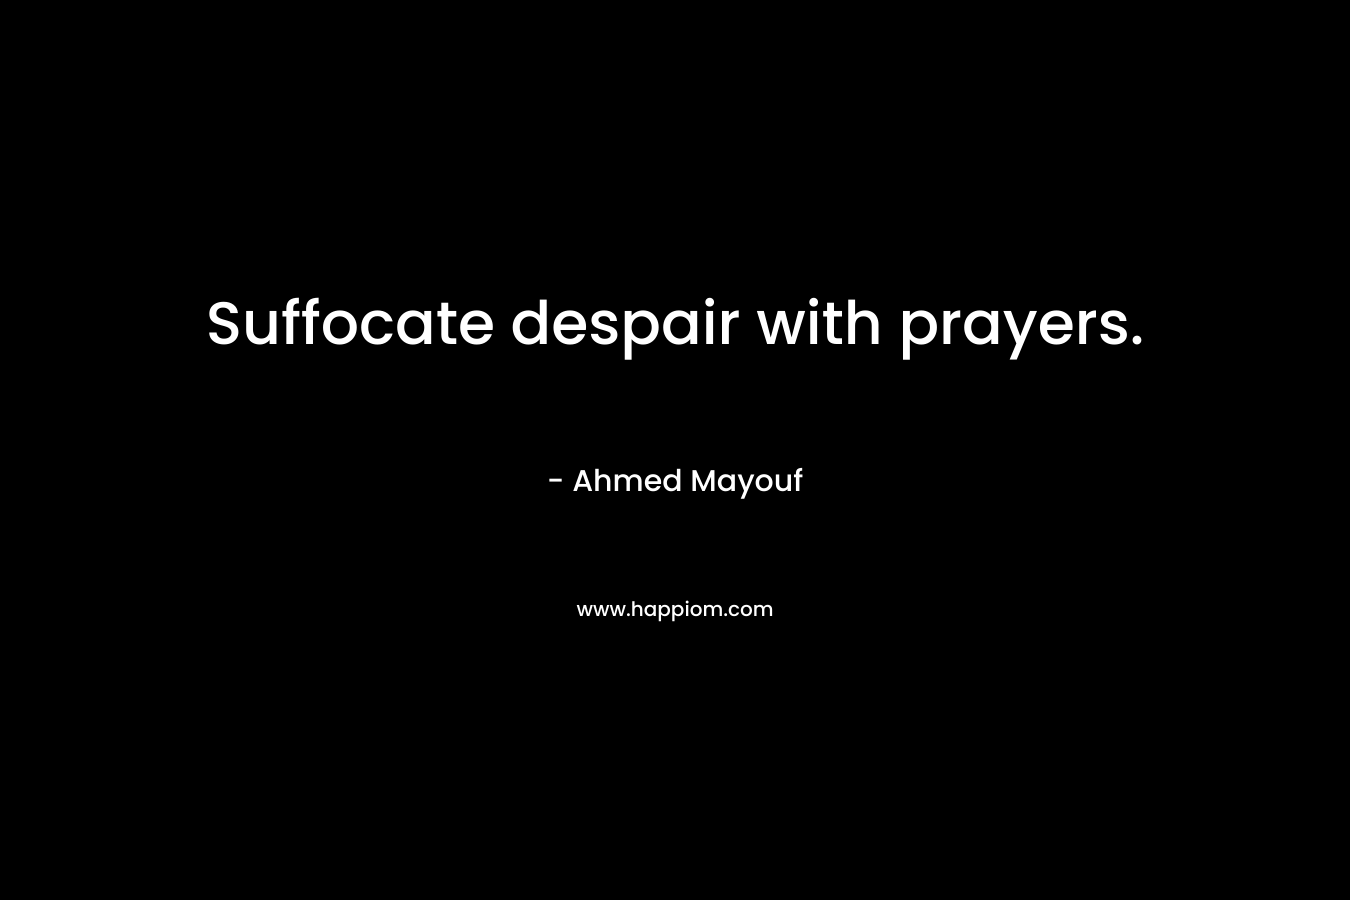 Suffocate despair with prayers.